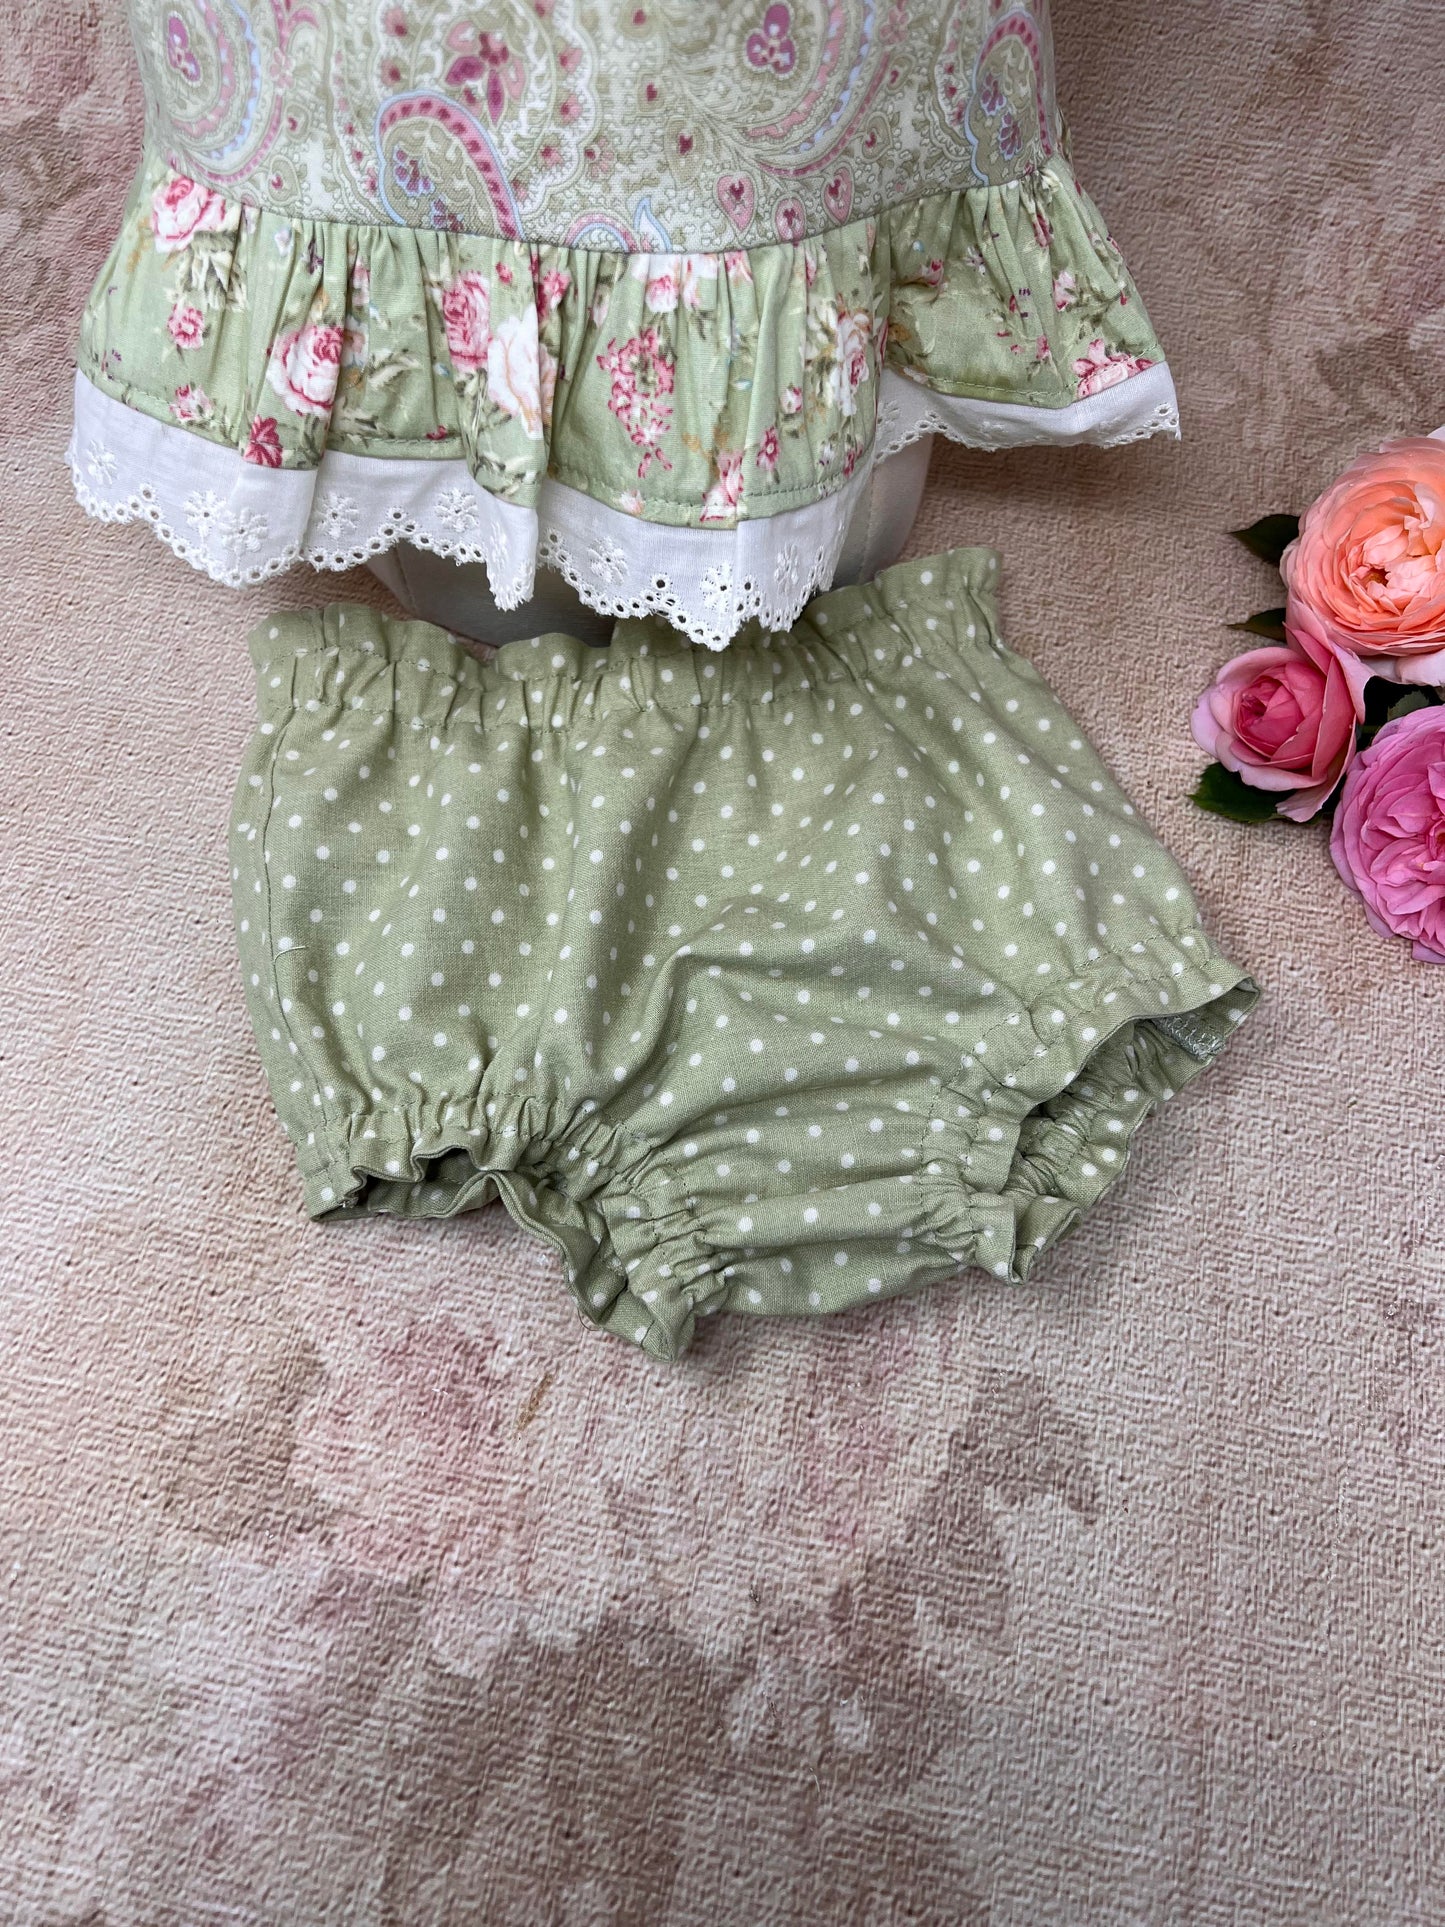 Toddler 9-12 mo Ruffled top and bloomers pretty green paisley and polka dot fabric. Free Shipping.